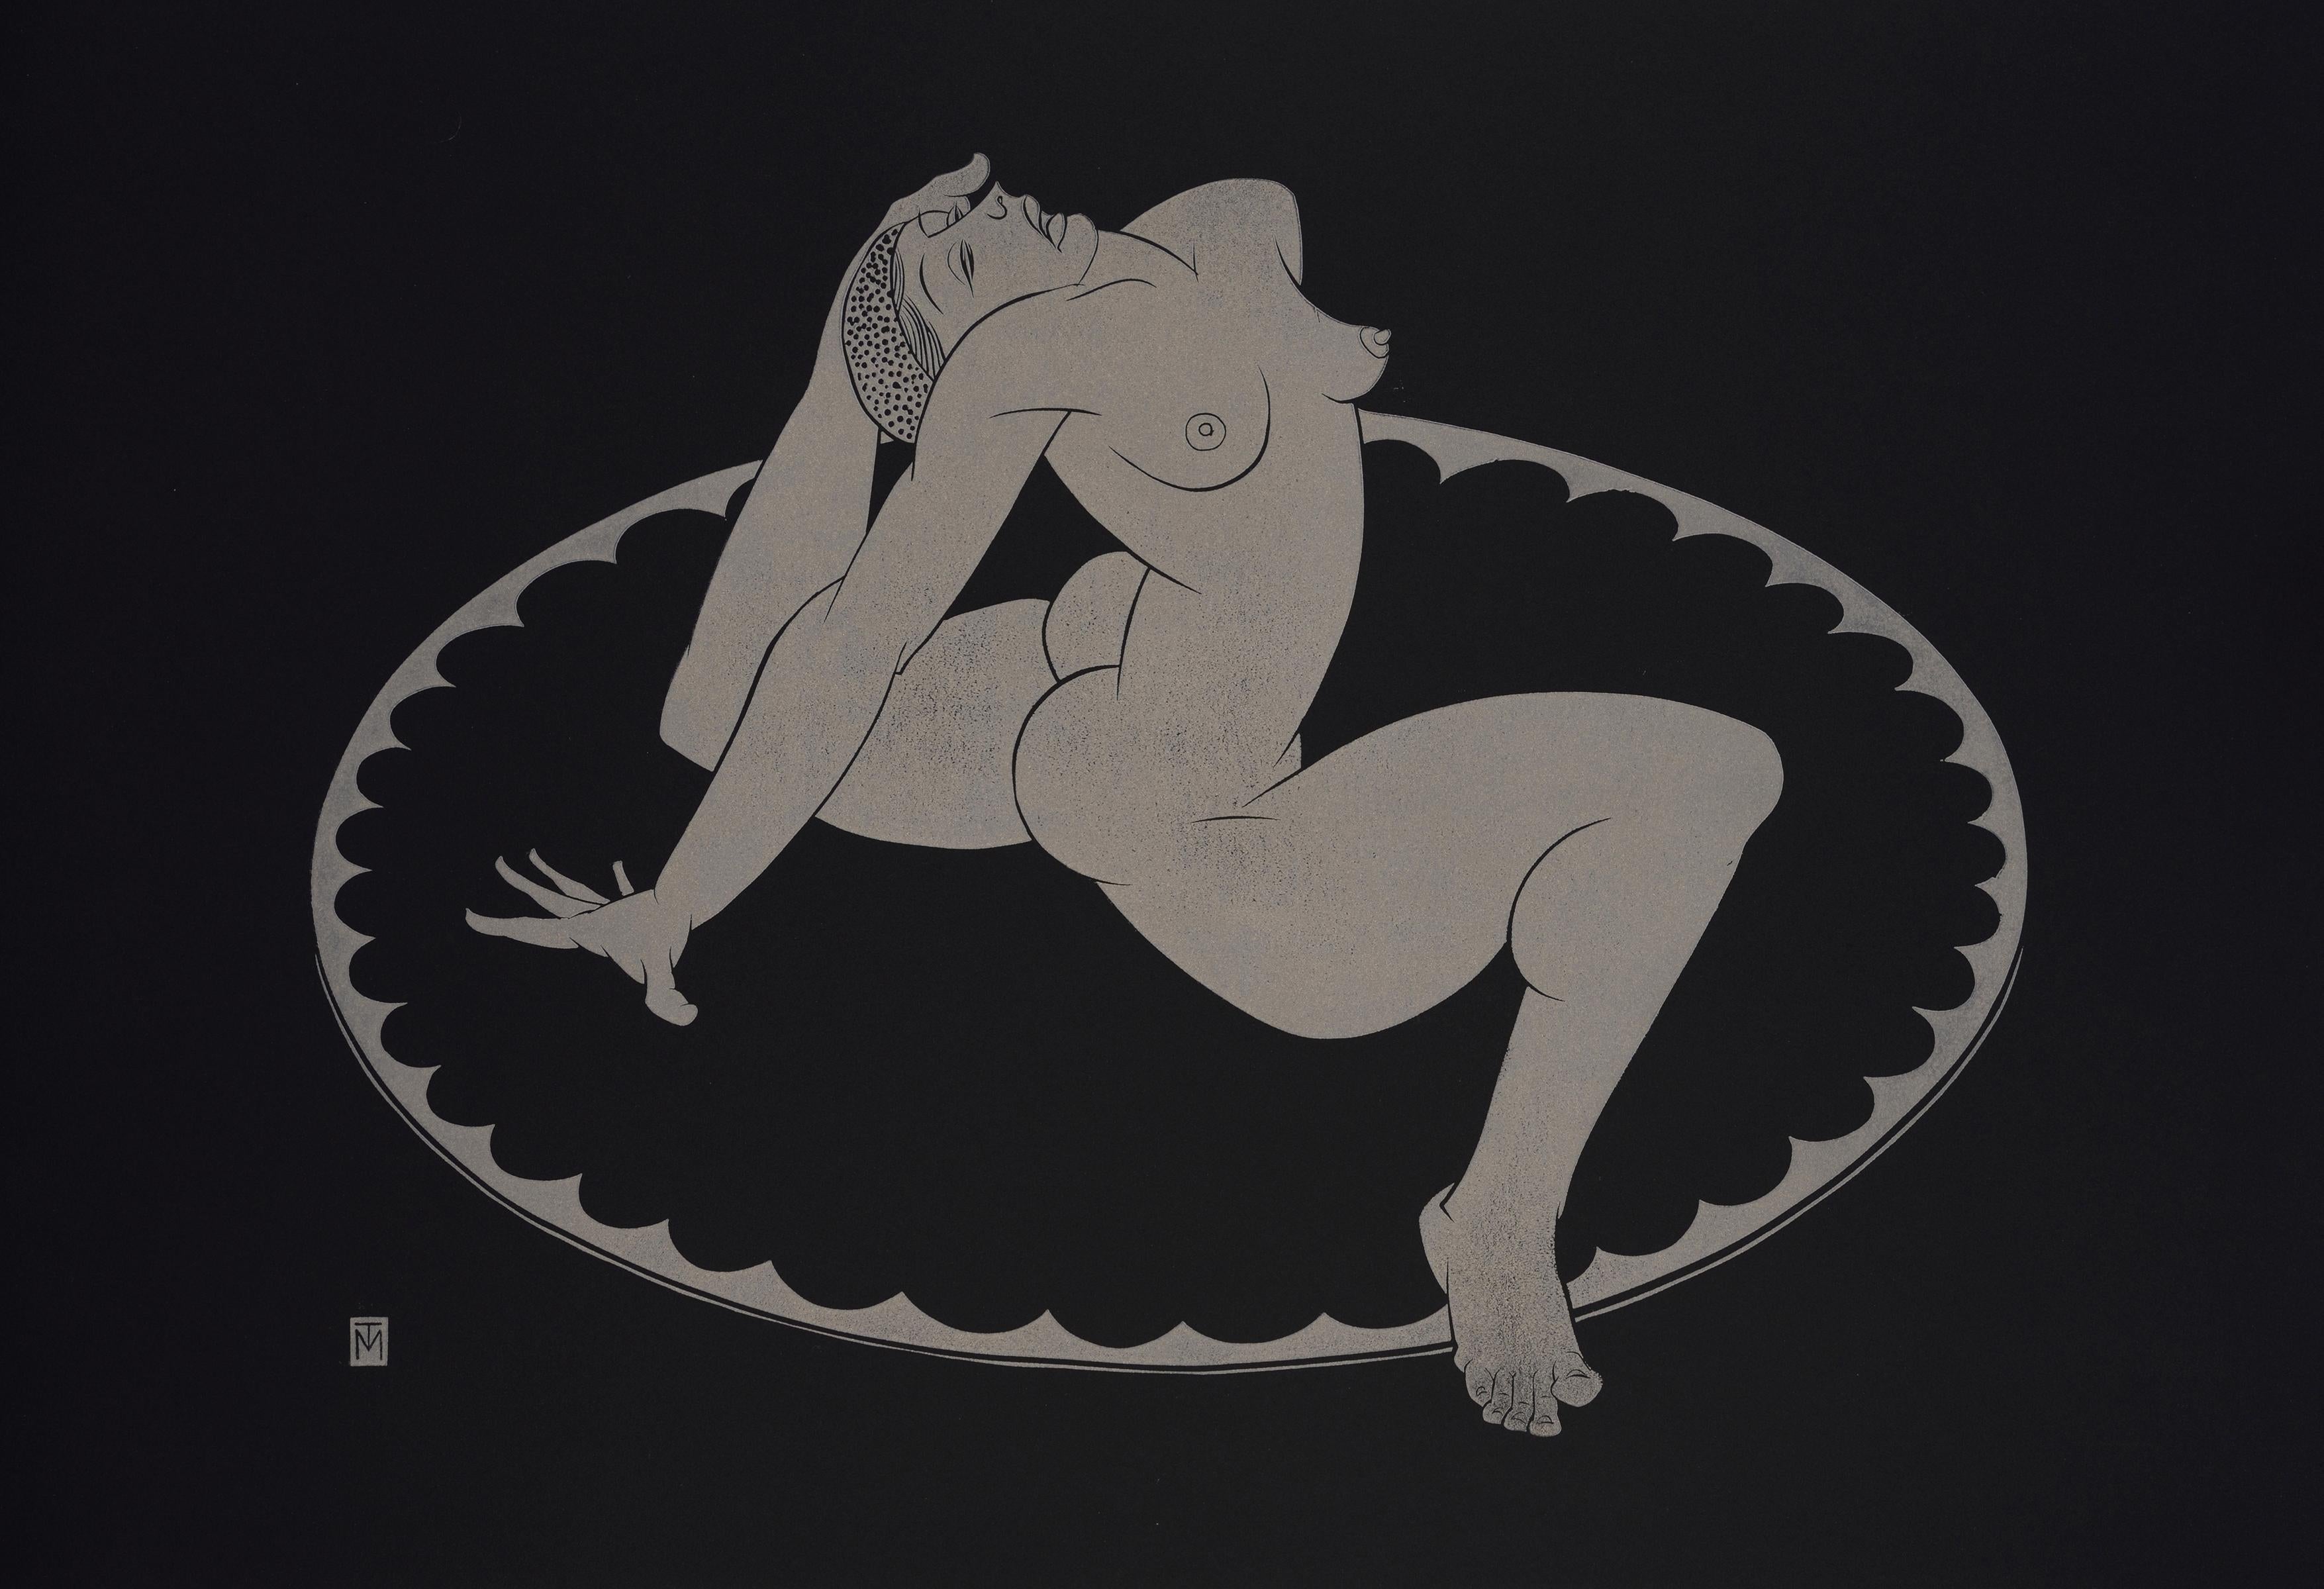 Martyn Tverdun Nude - "On The Circle" - gold block print on black paper